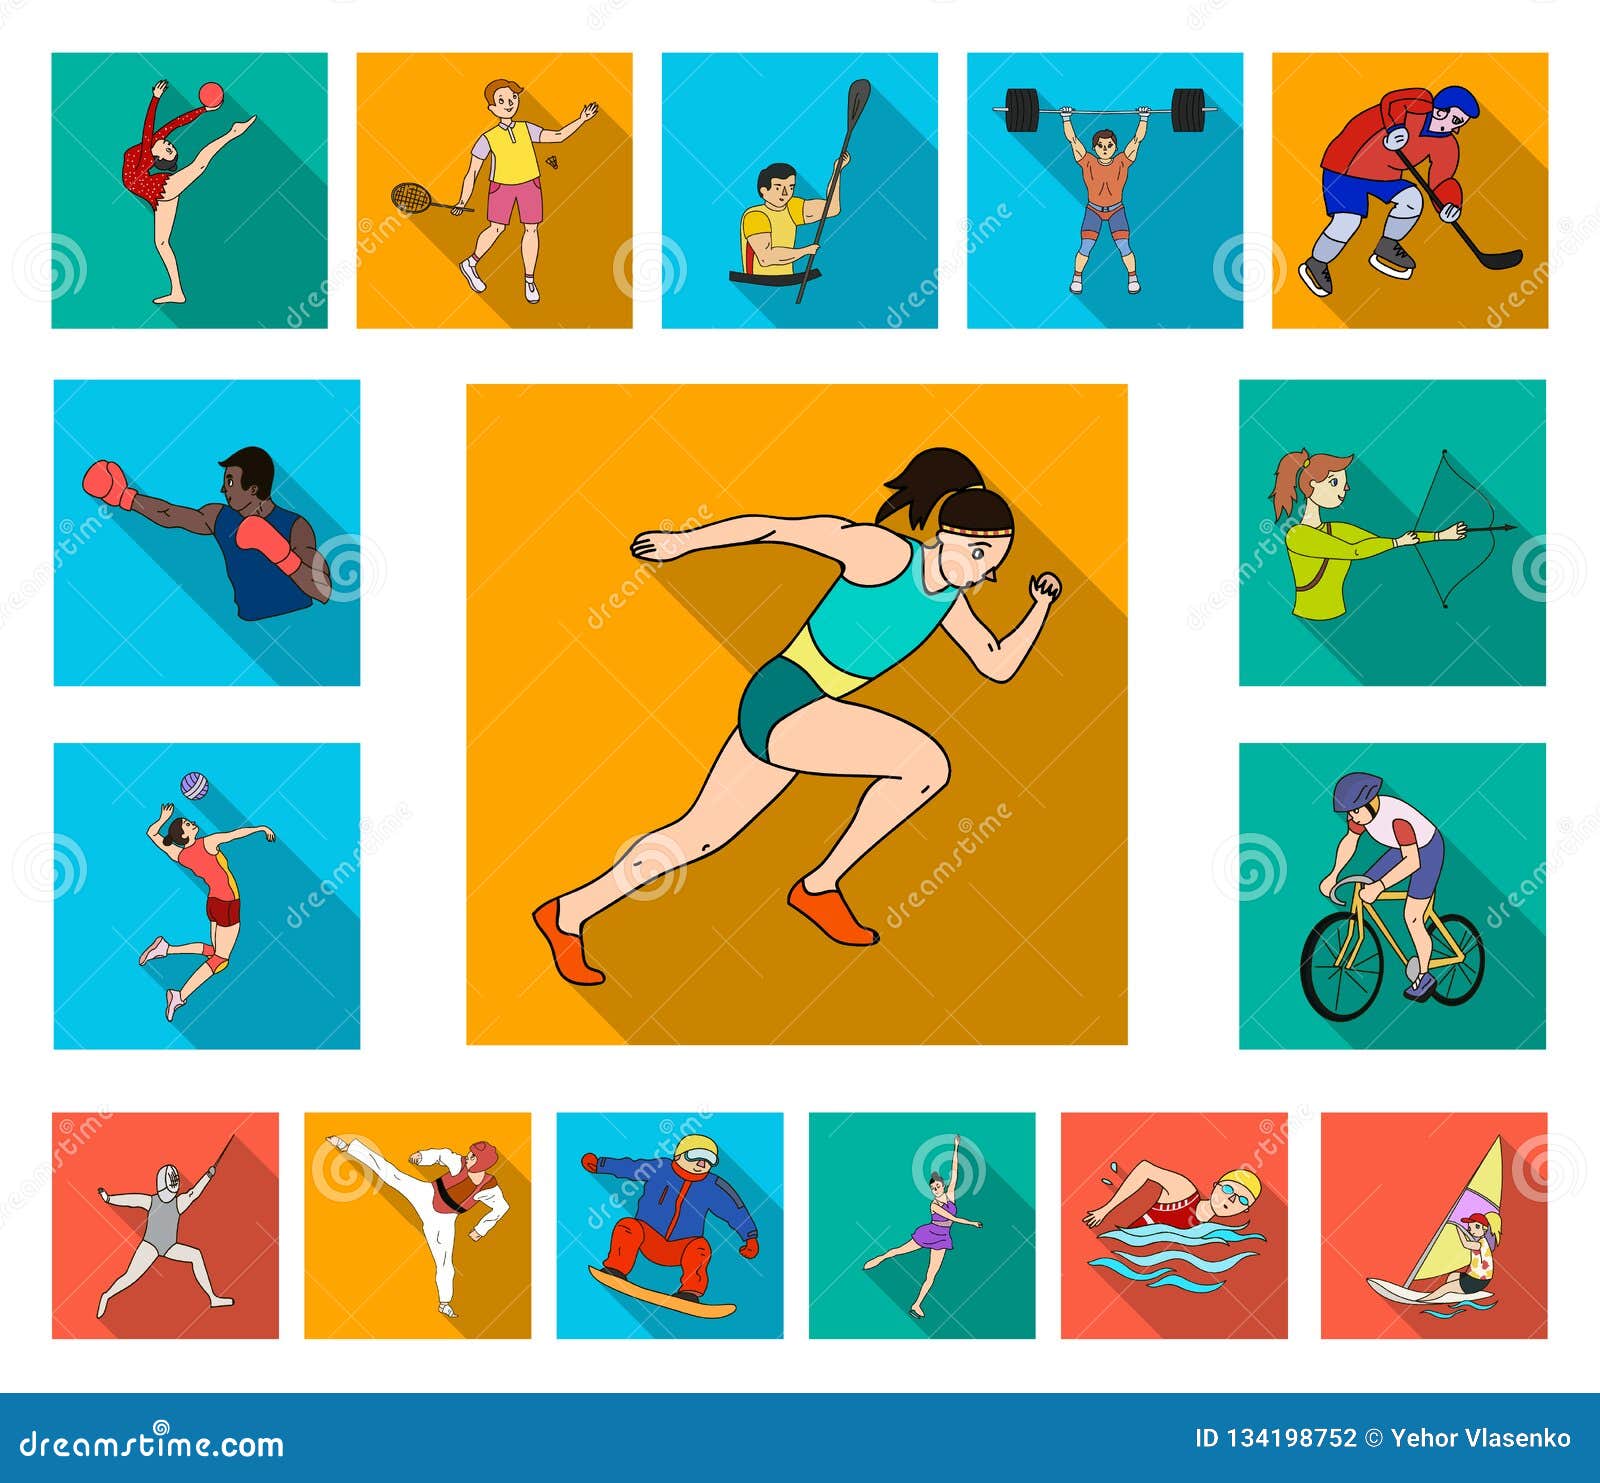 All kinds of sports. Летние виды спорта. Иллюстрации с разными видами спорта. Виды спорта для детей. Летние виды спорта рисунки.